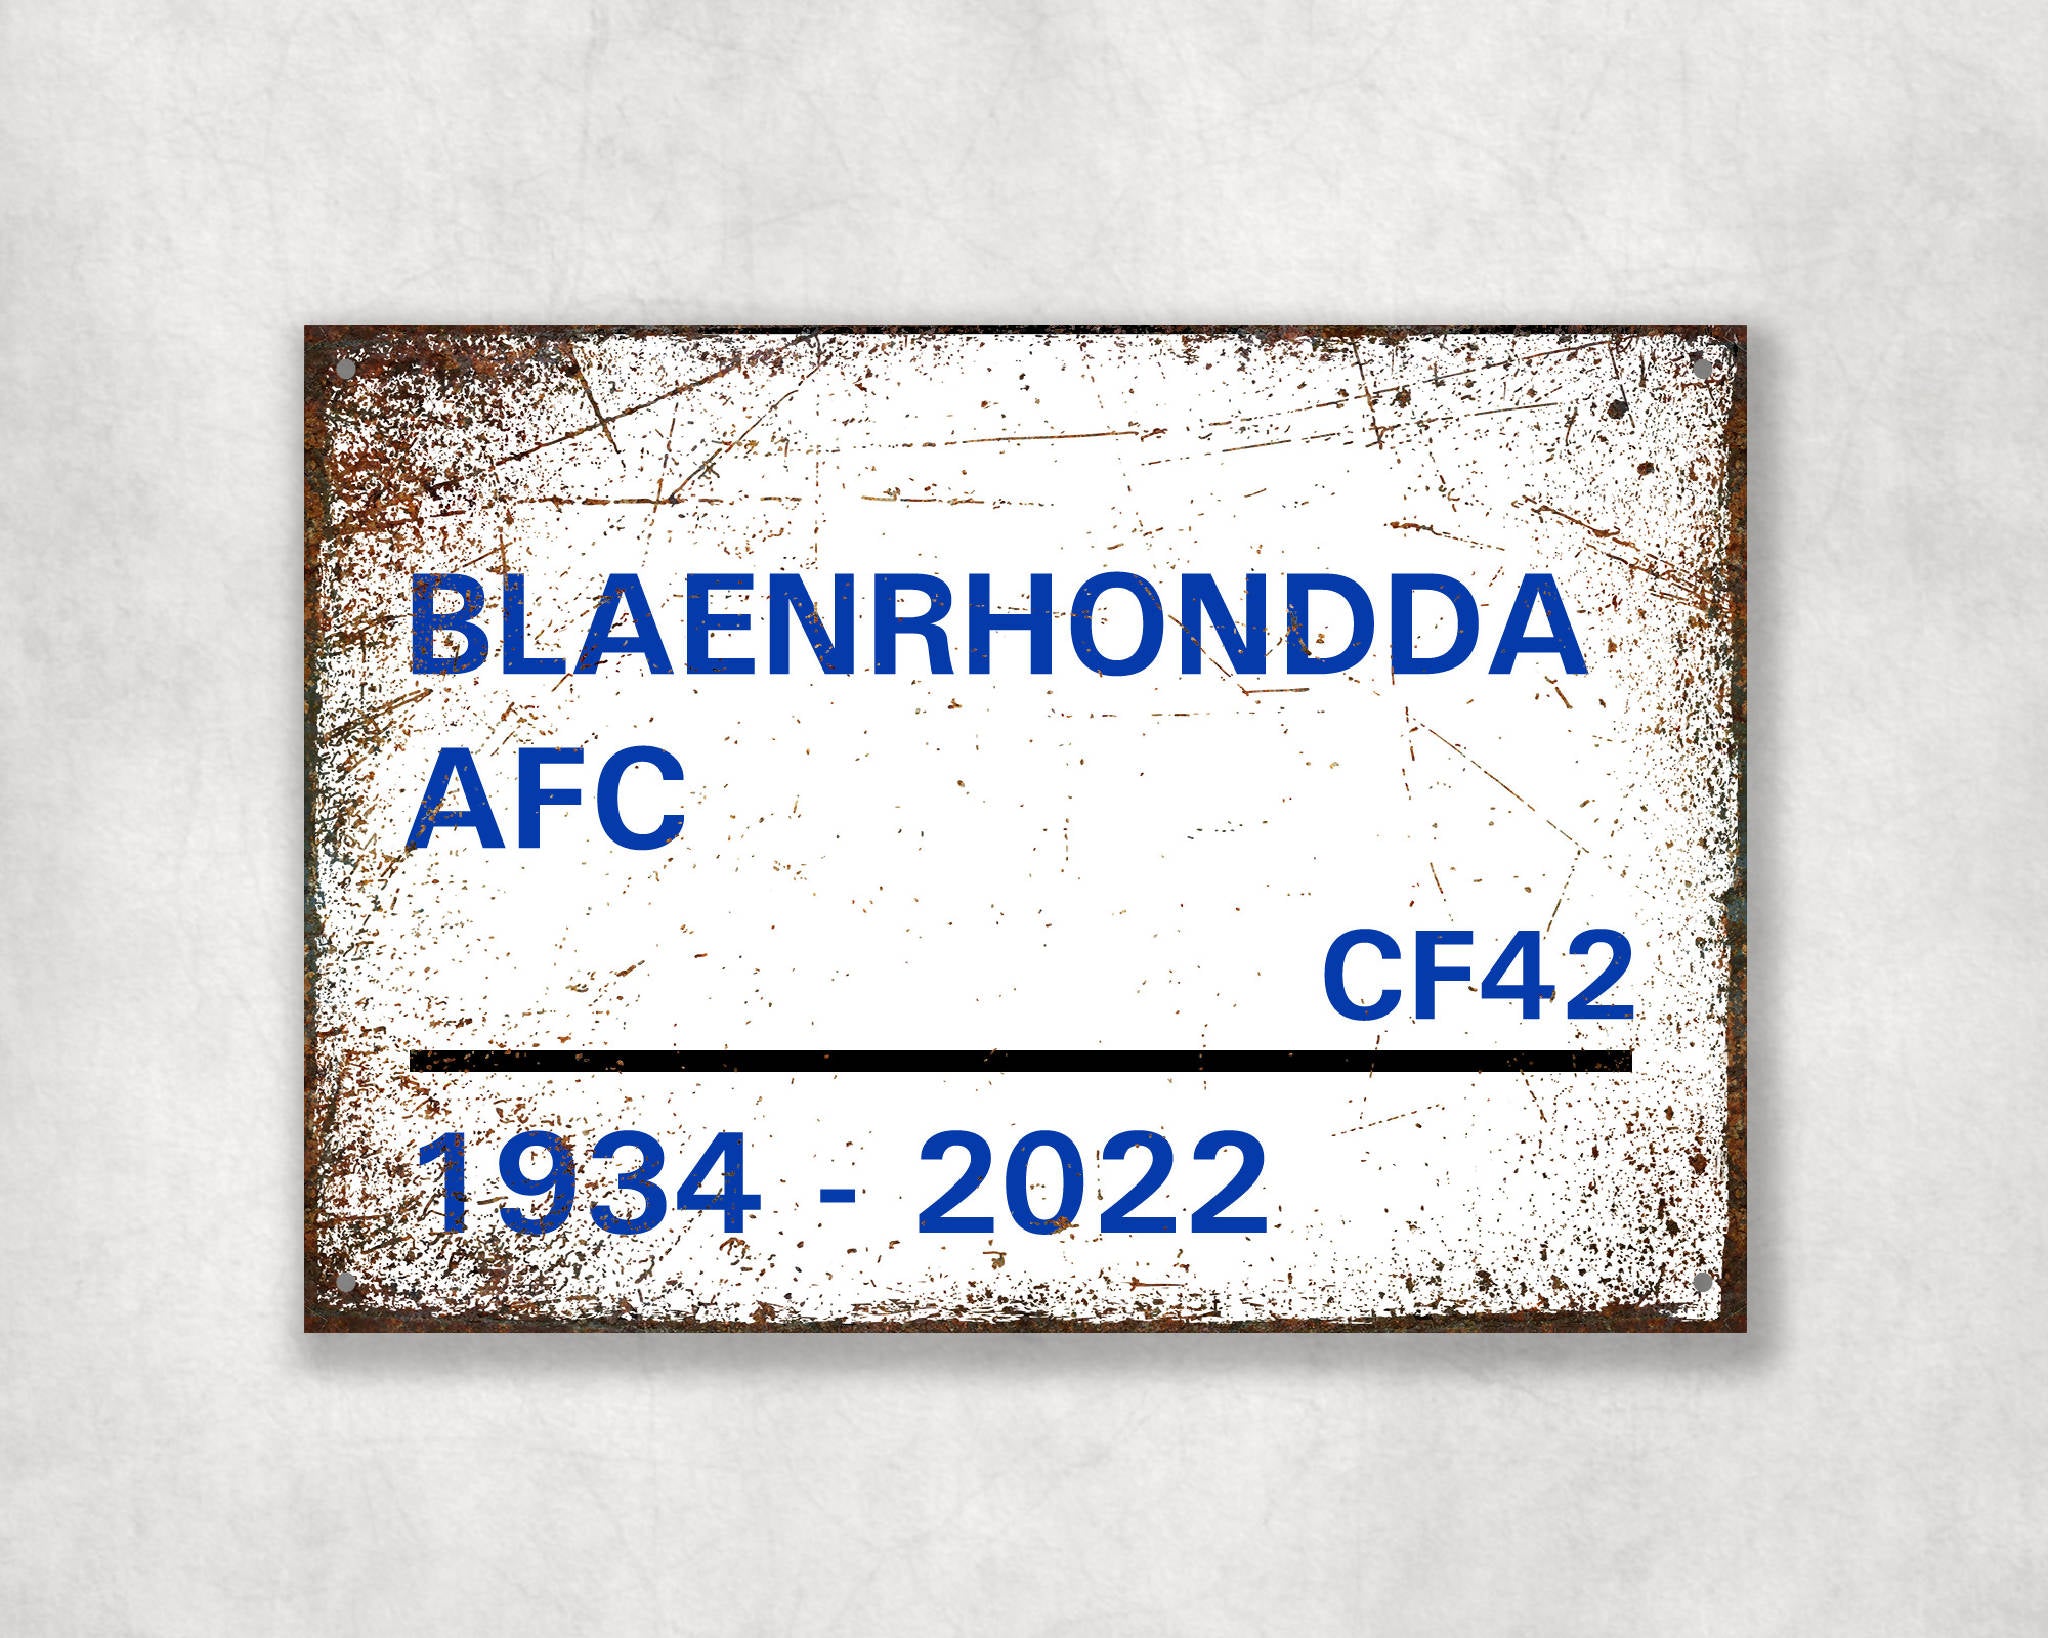 Blaenrhondda AFC aluminium printed metal street sign - gift, keepsake, football gift